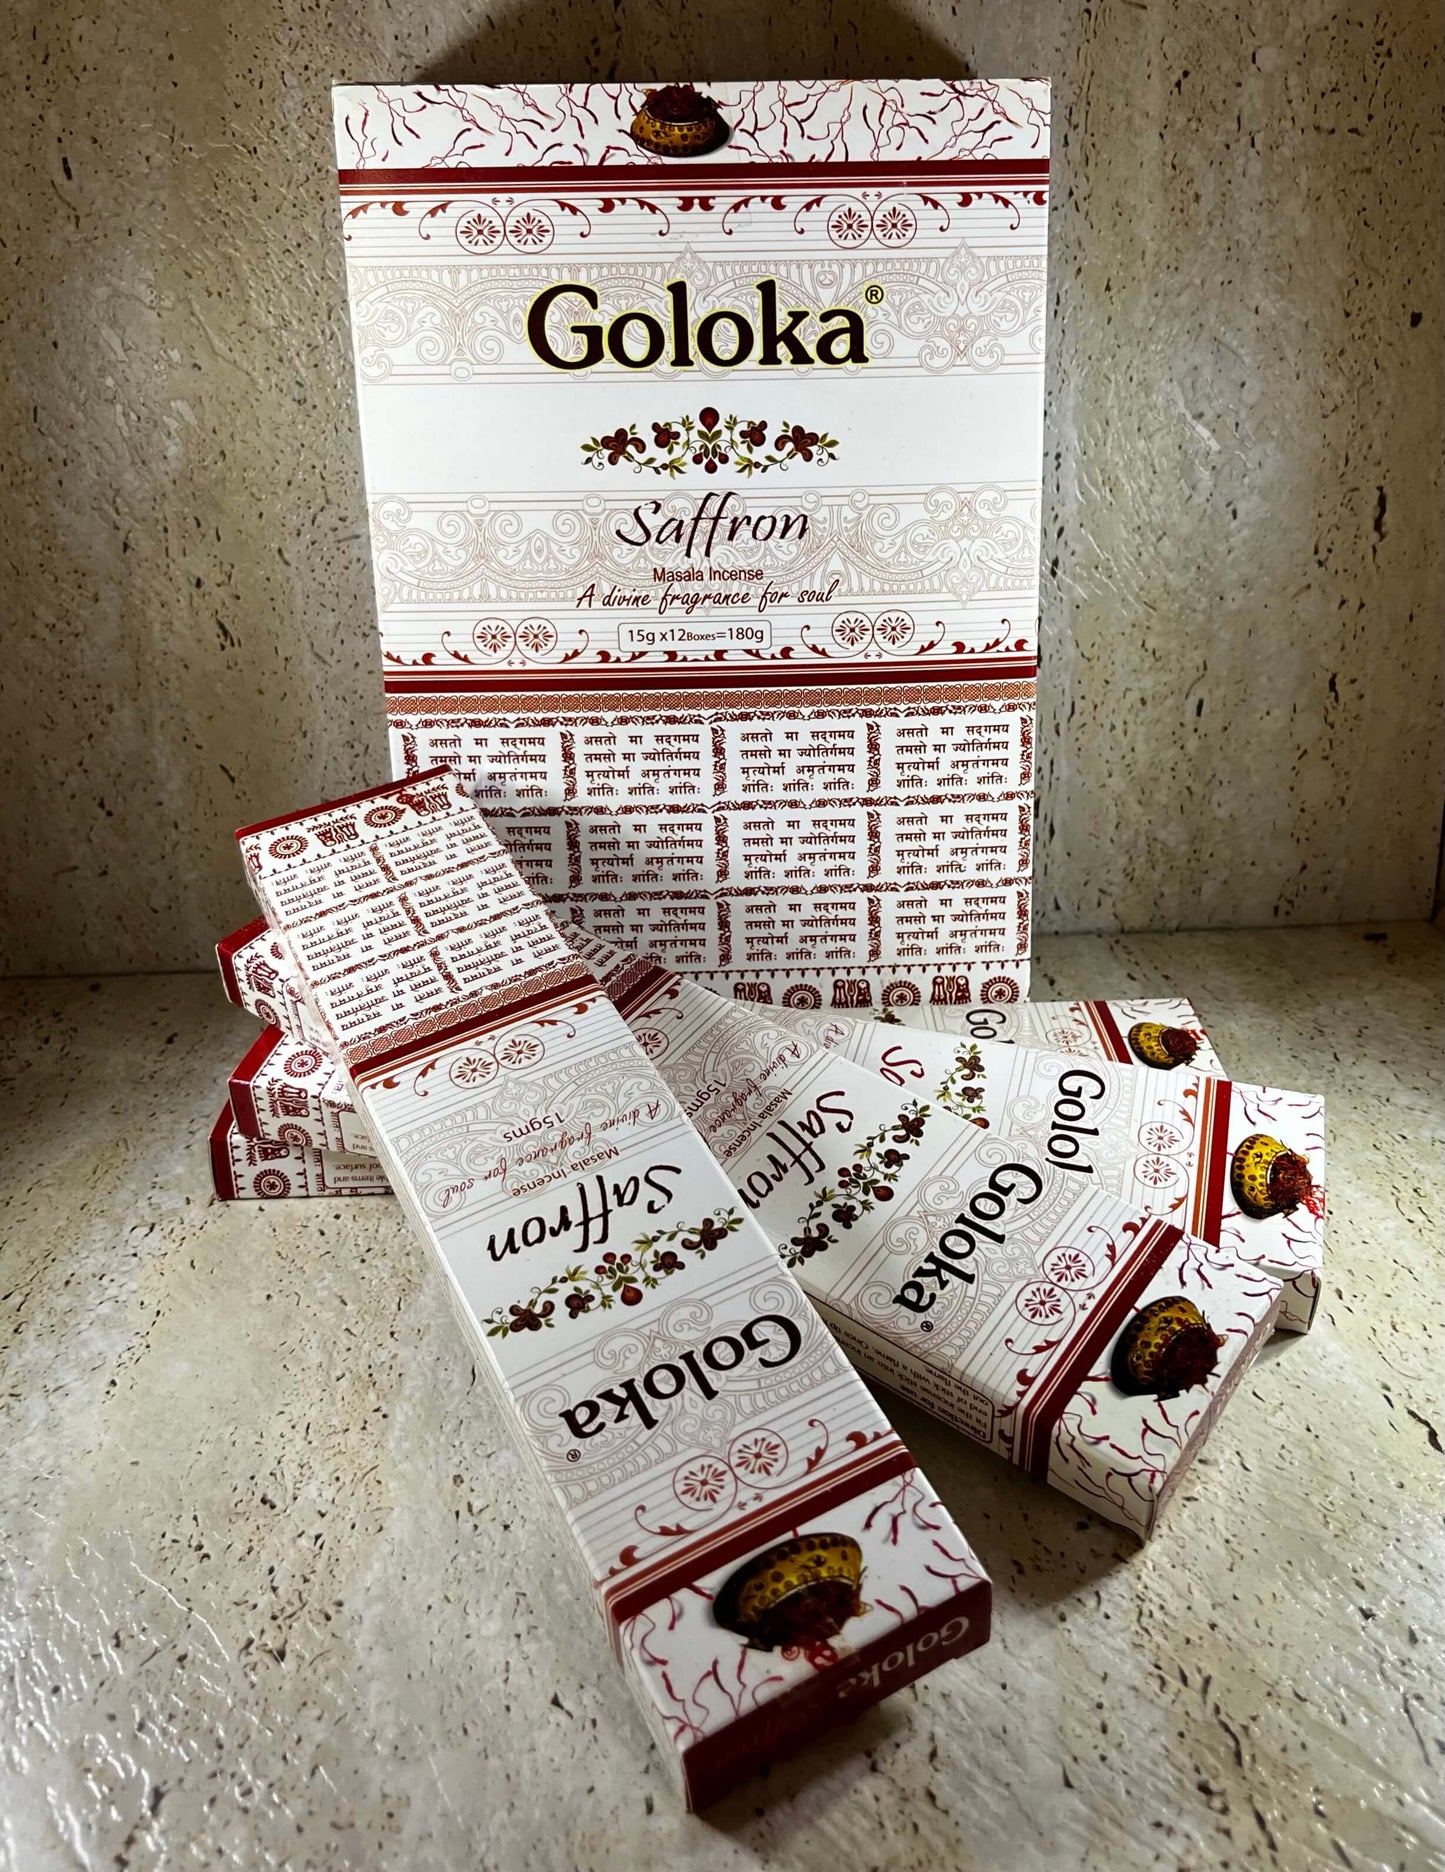 Goloka Saffron incense